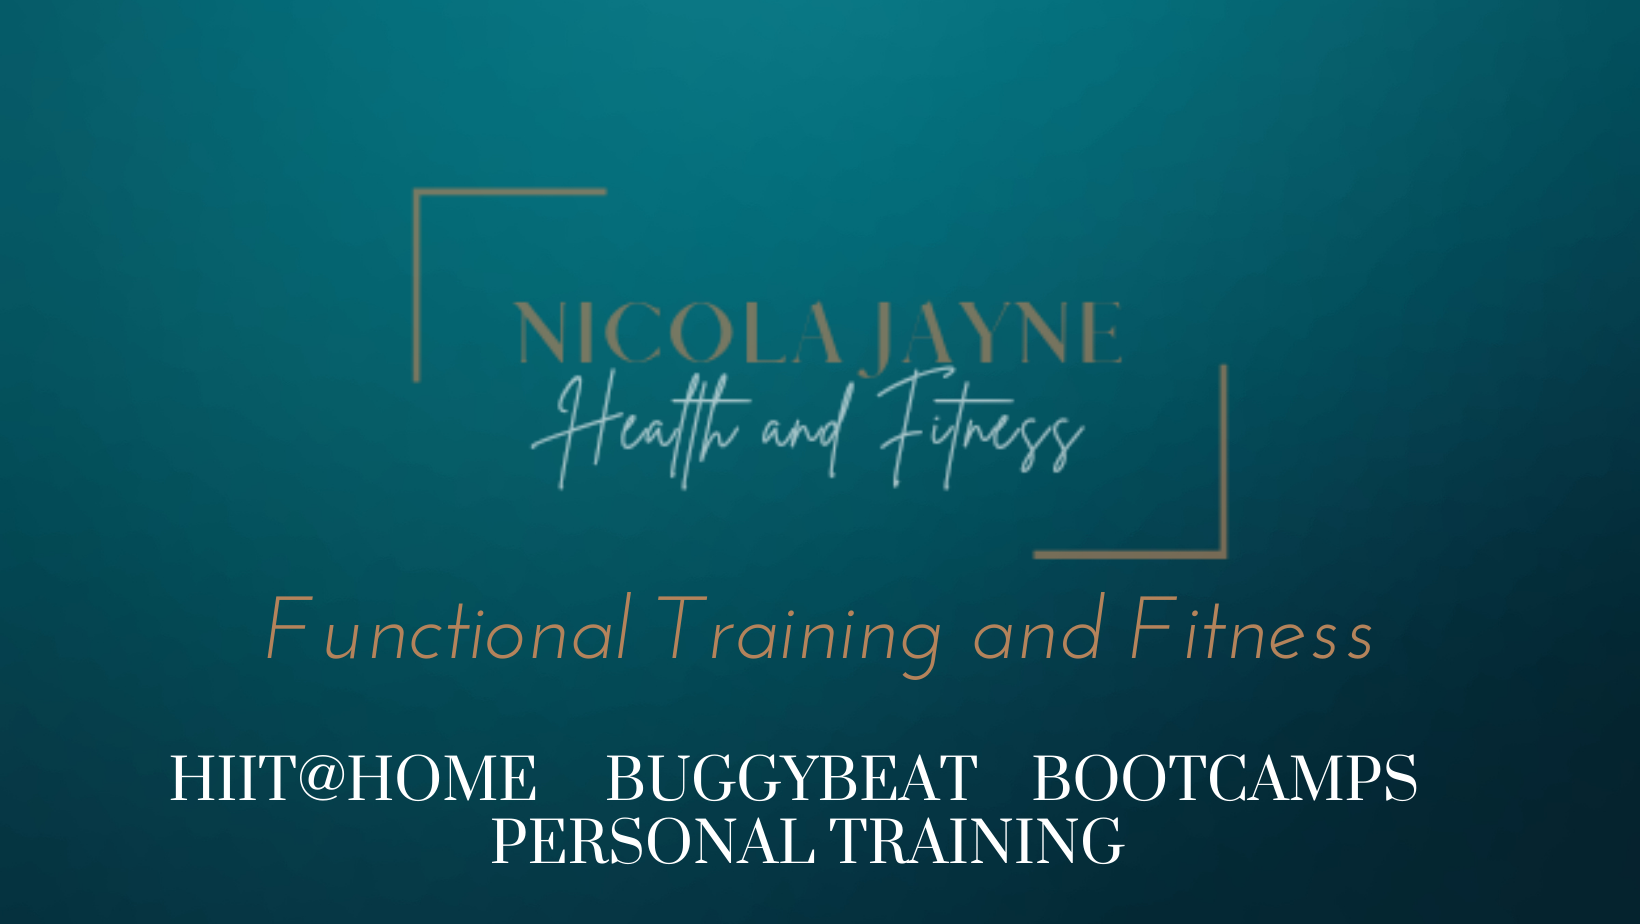 Nicola Jayne Health & Fitness's main image